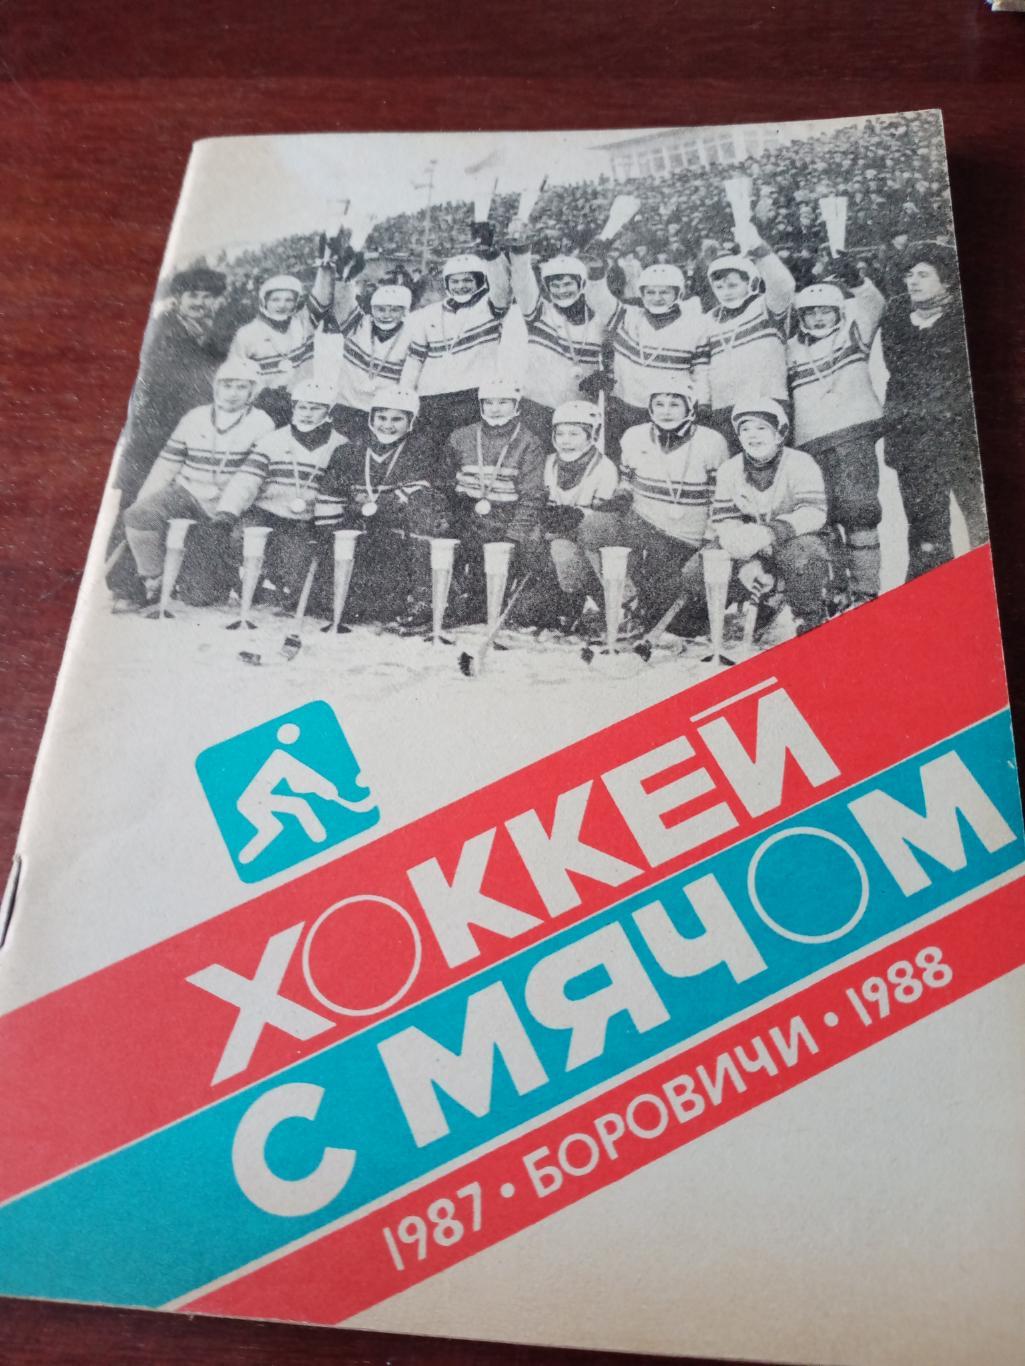 Хоккей с мячом. Боровичи - 1987/88